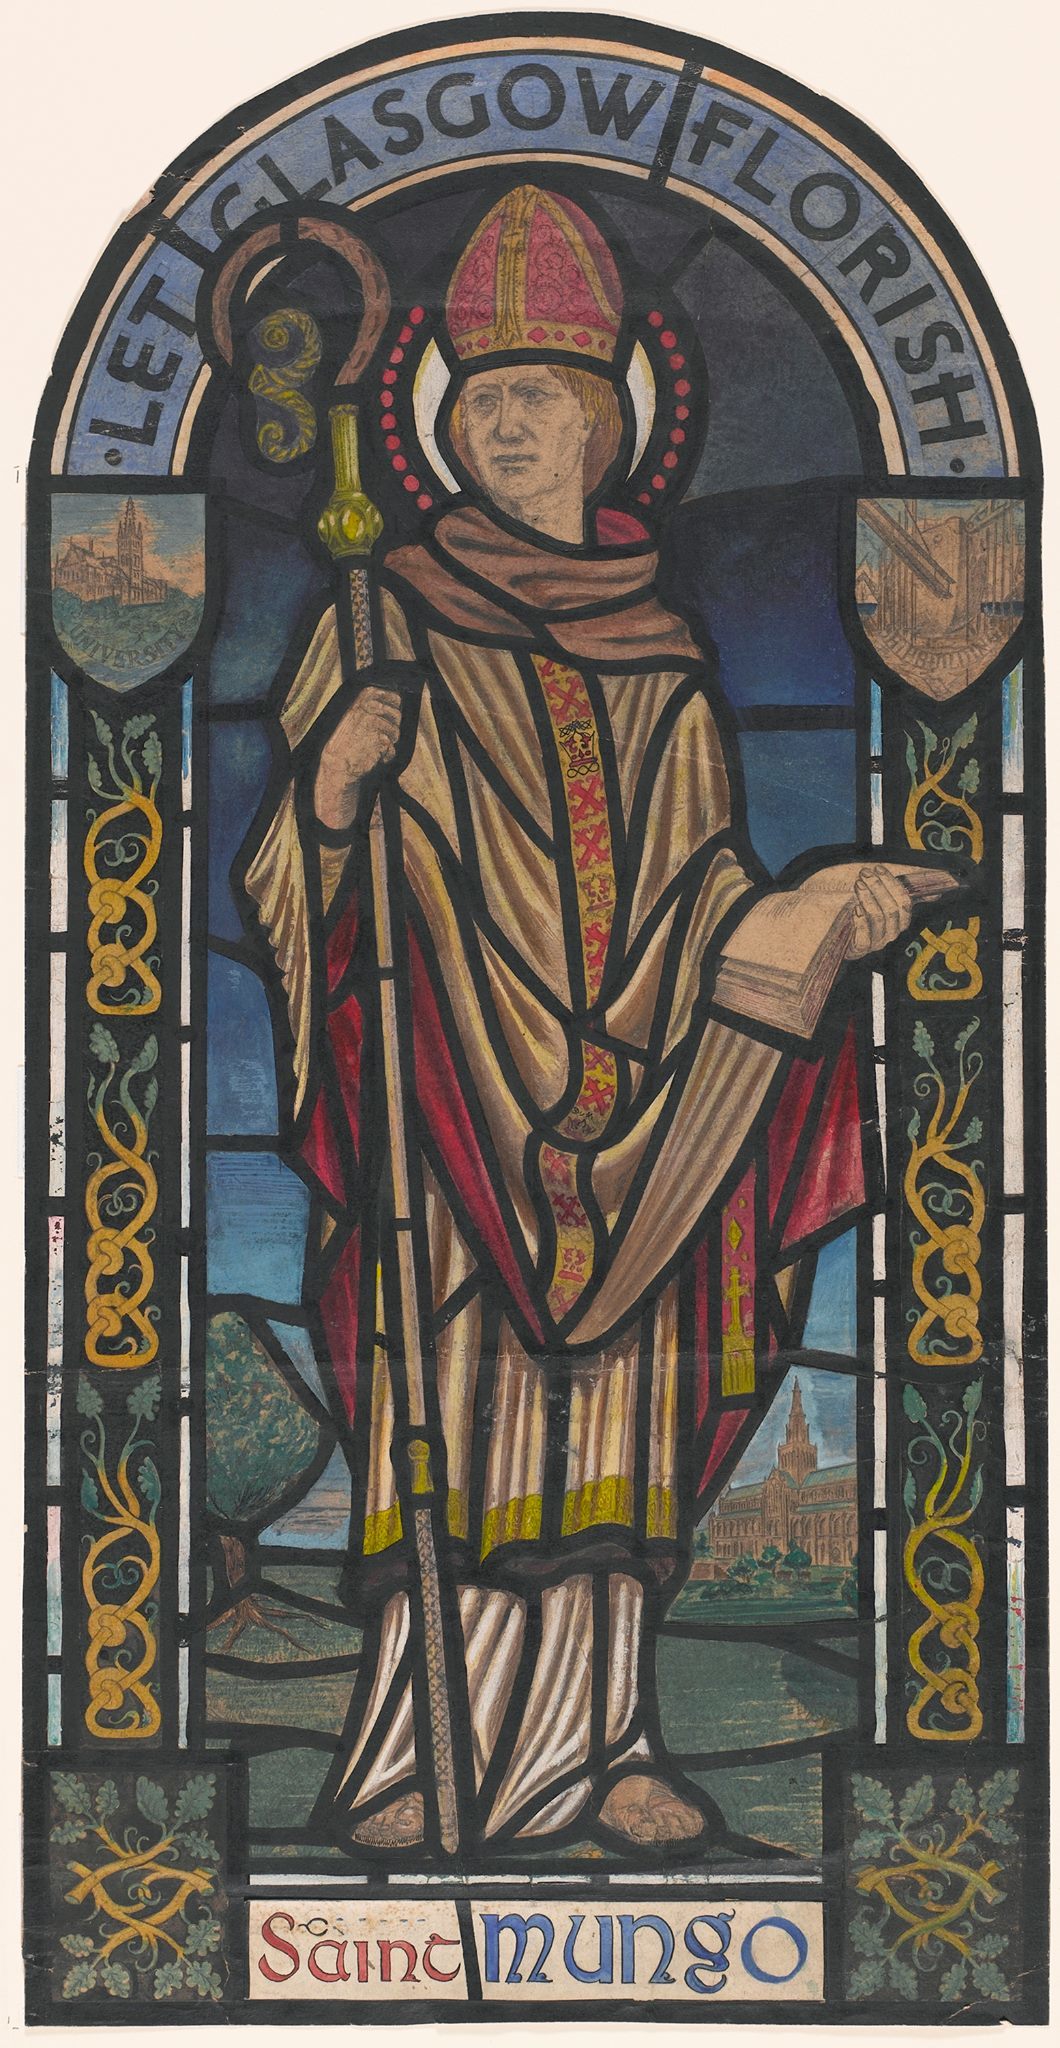 St Mungo, the patron saint of Glasgow